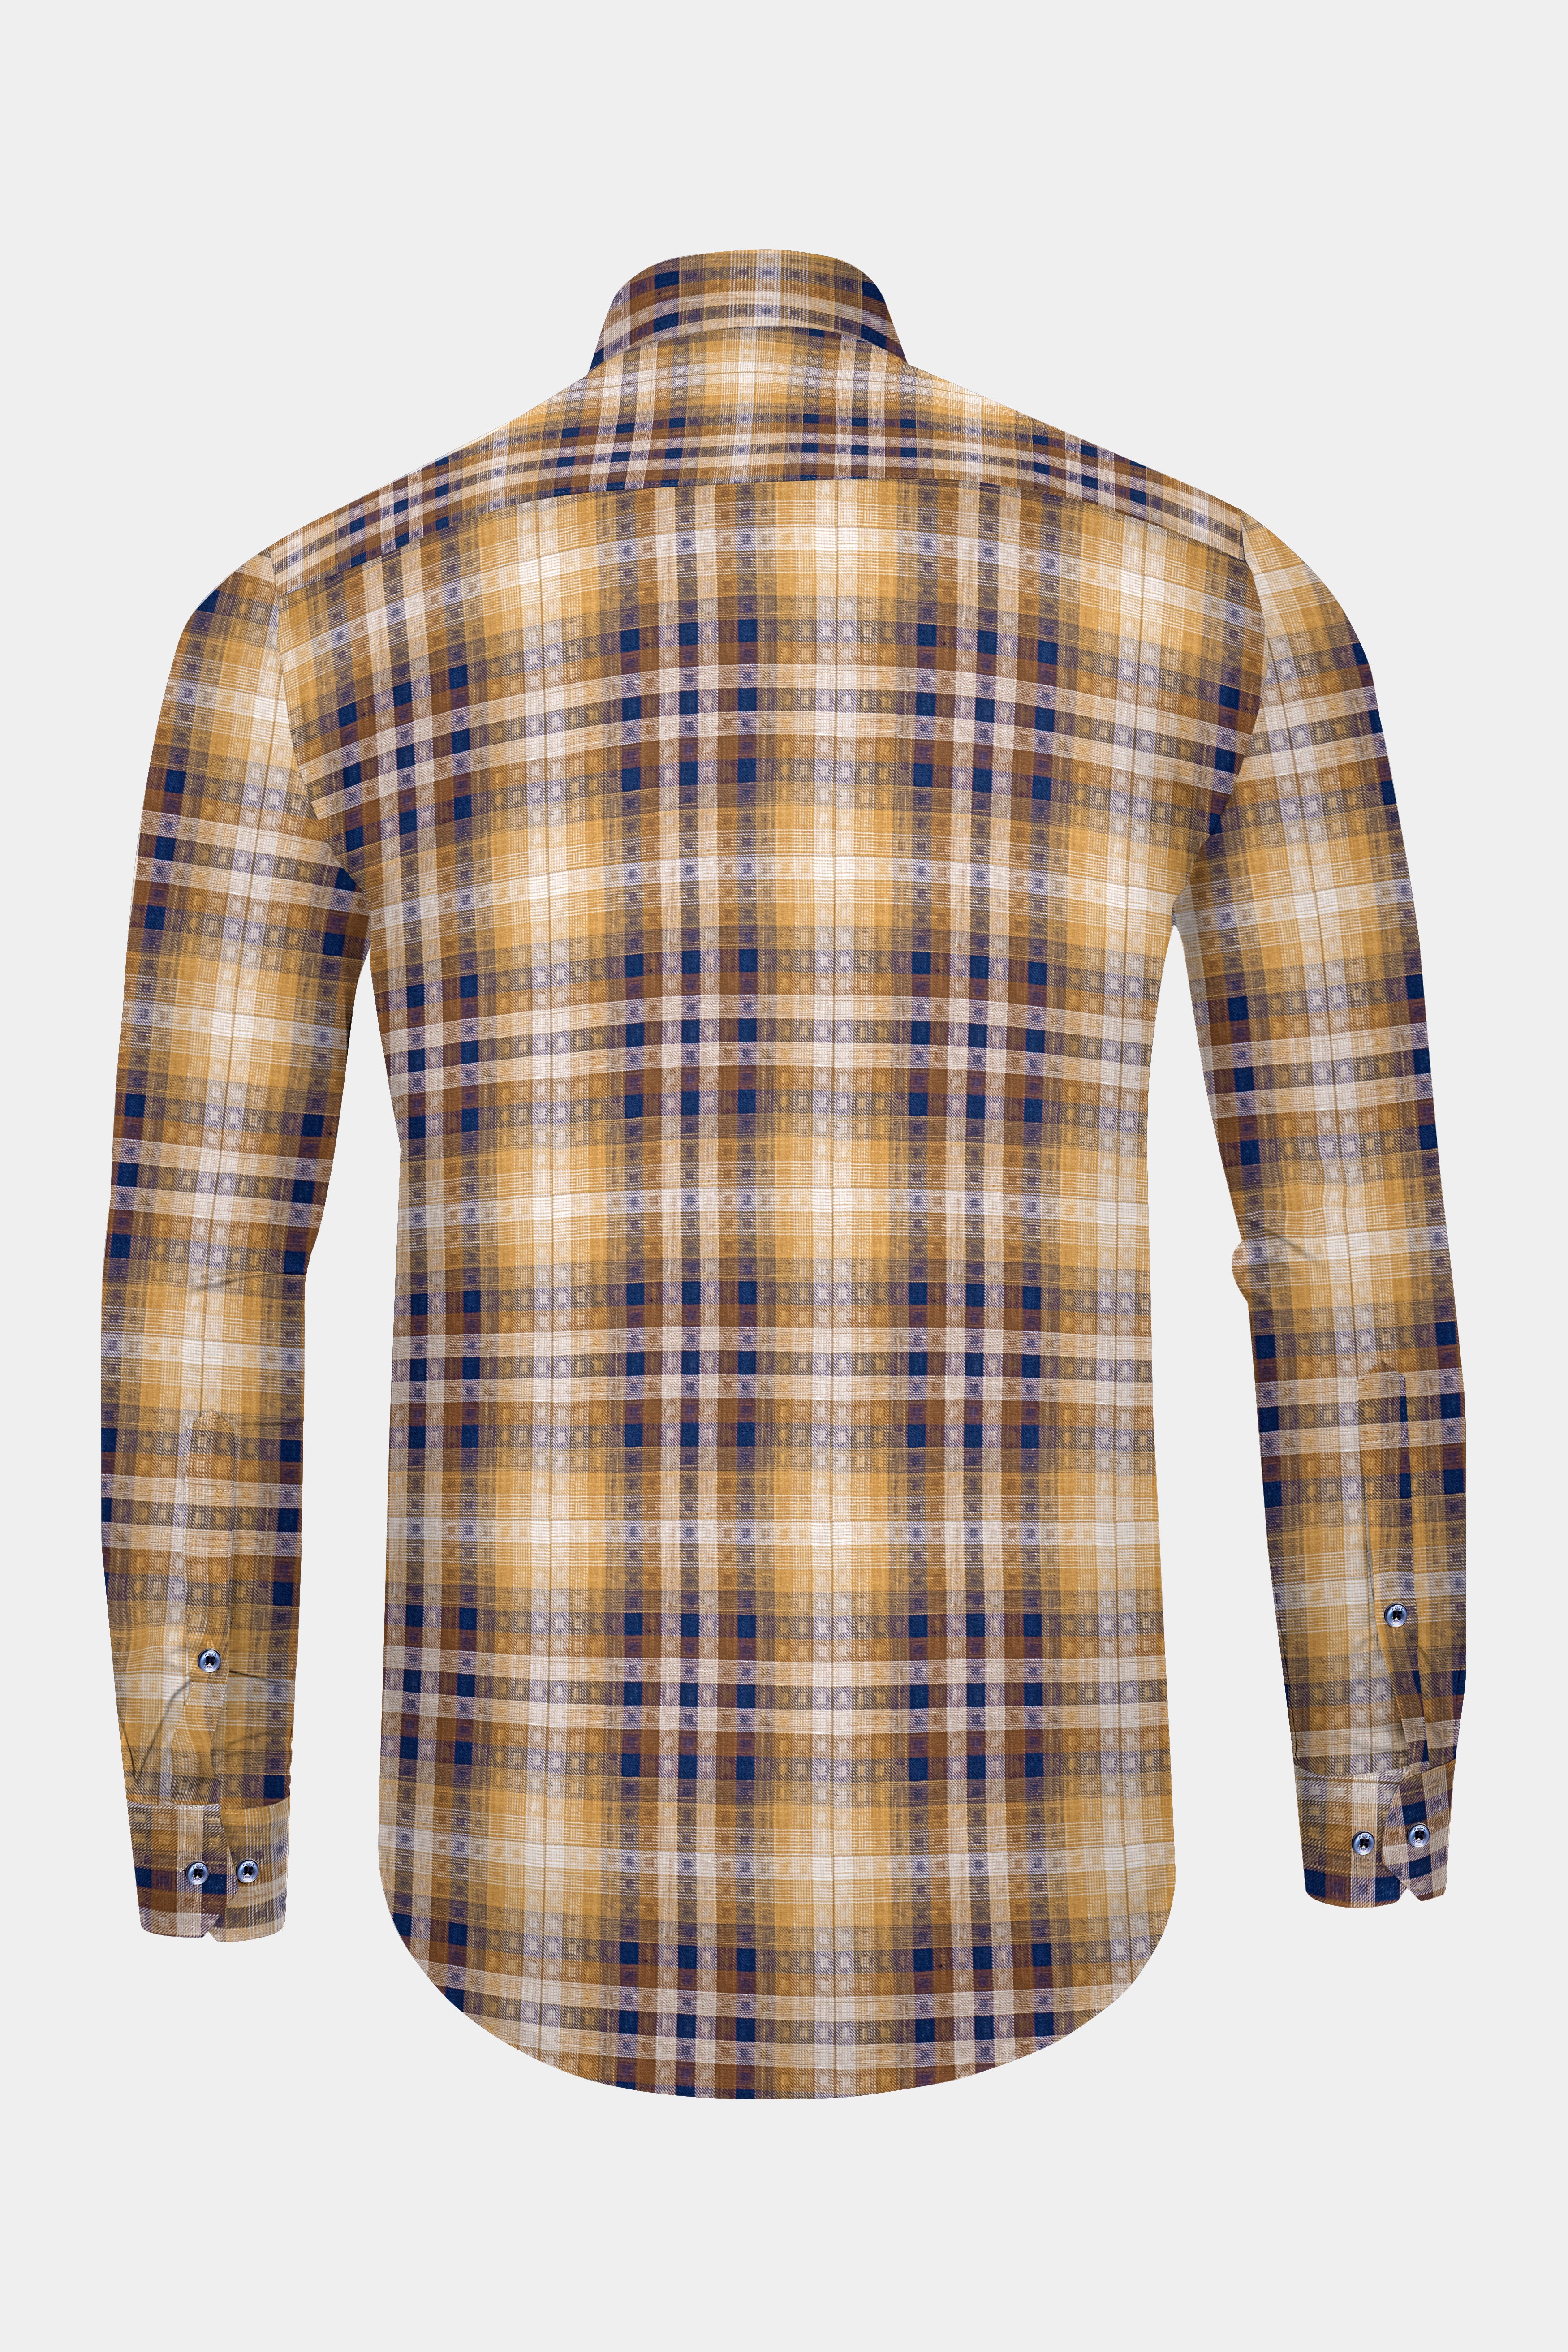 Ironstone Brown and Rhino Blue Plaid Twill Textured Premium Cotton Shirt